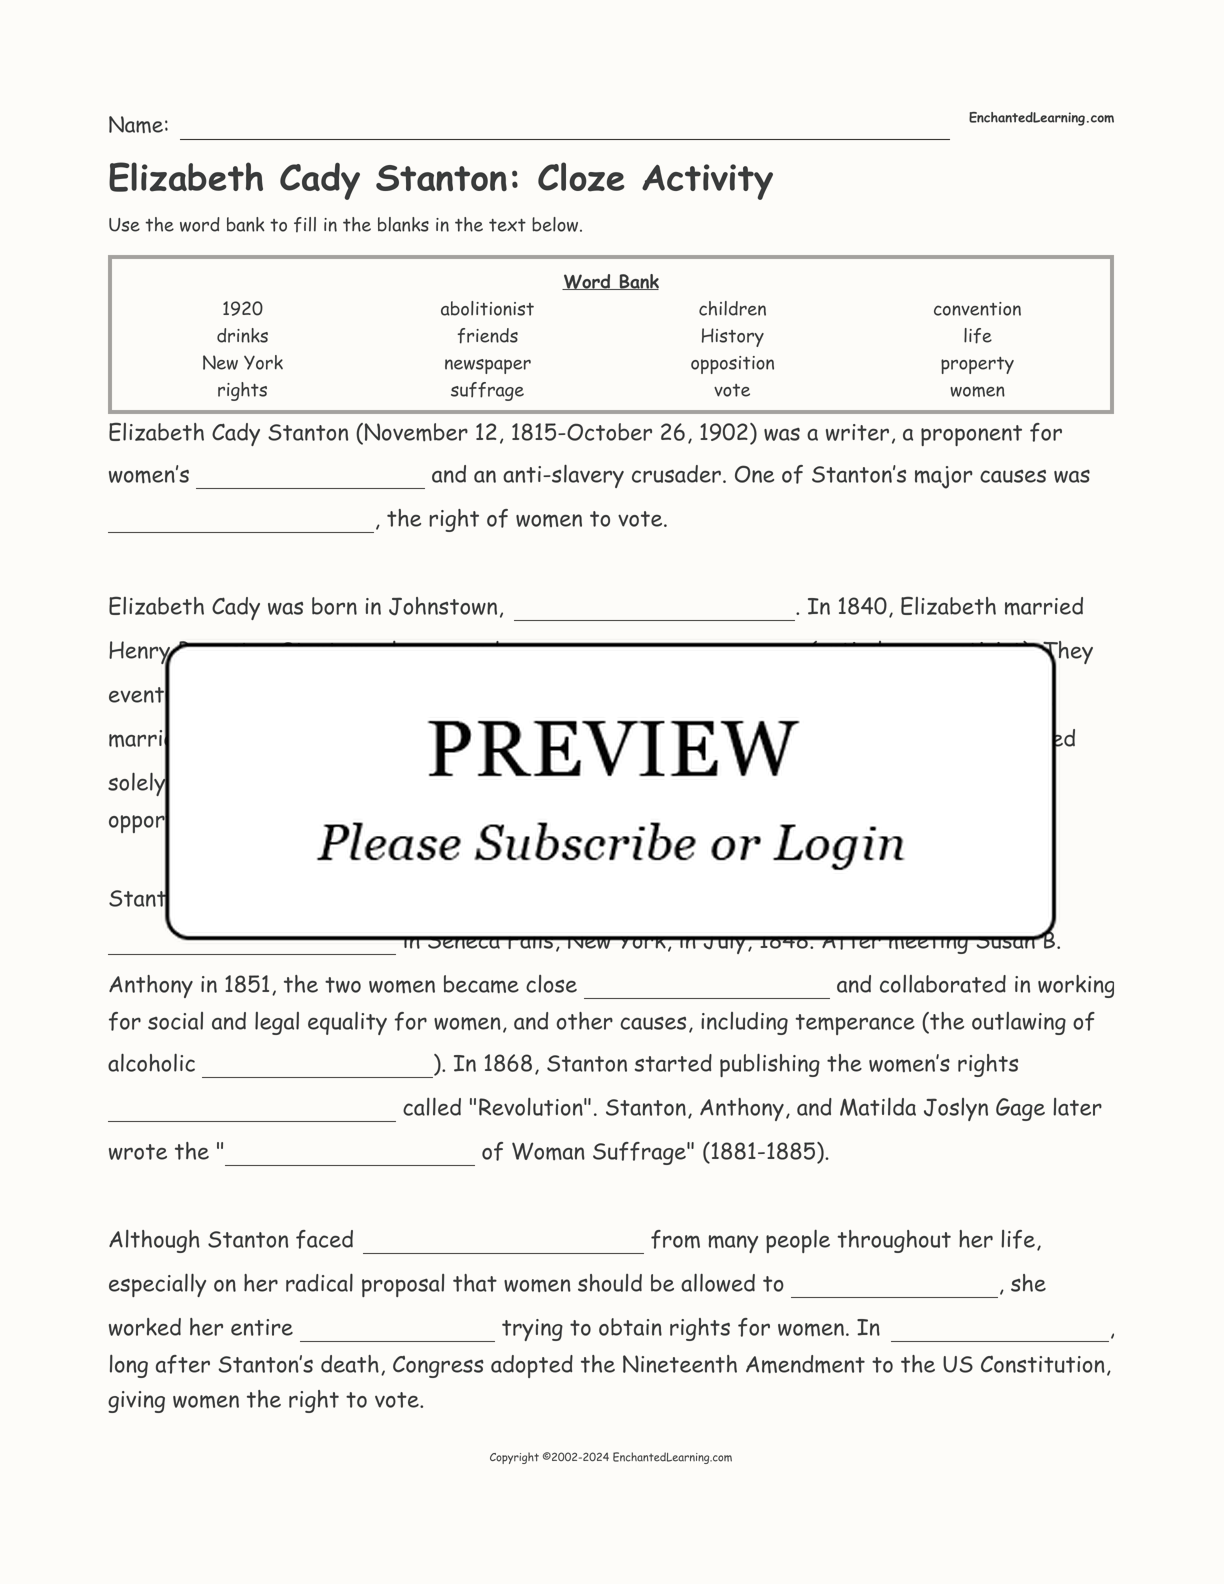 Elizabeth Cady Stanton: Cloze Activity interactive worksheet page 1